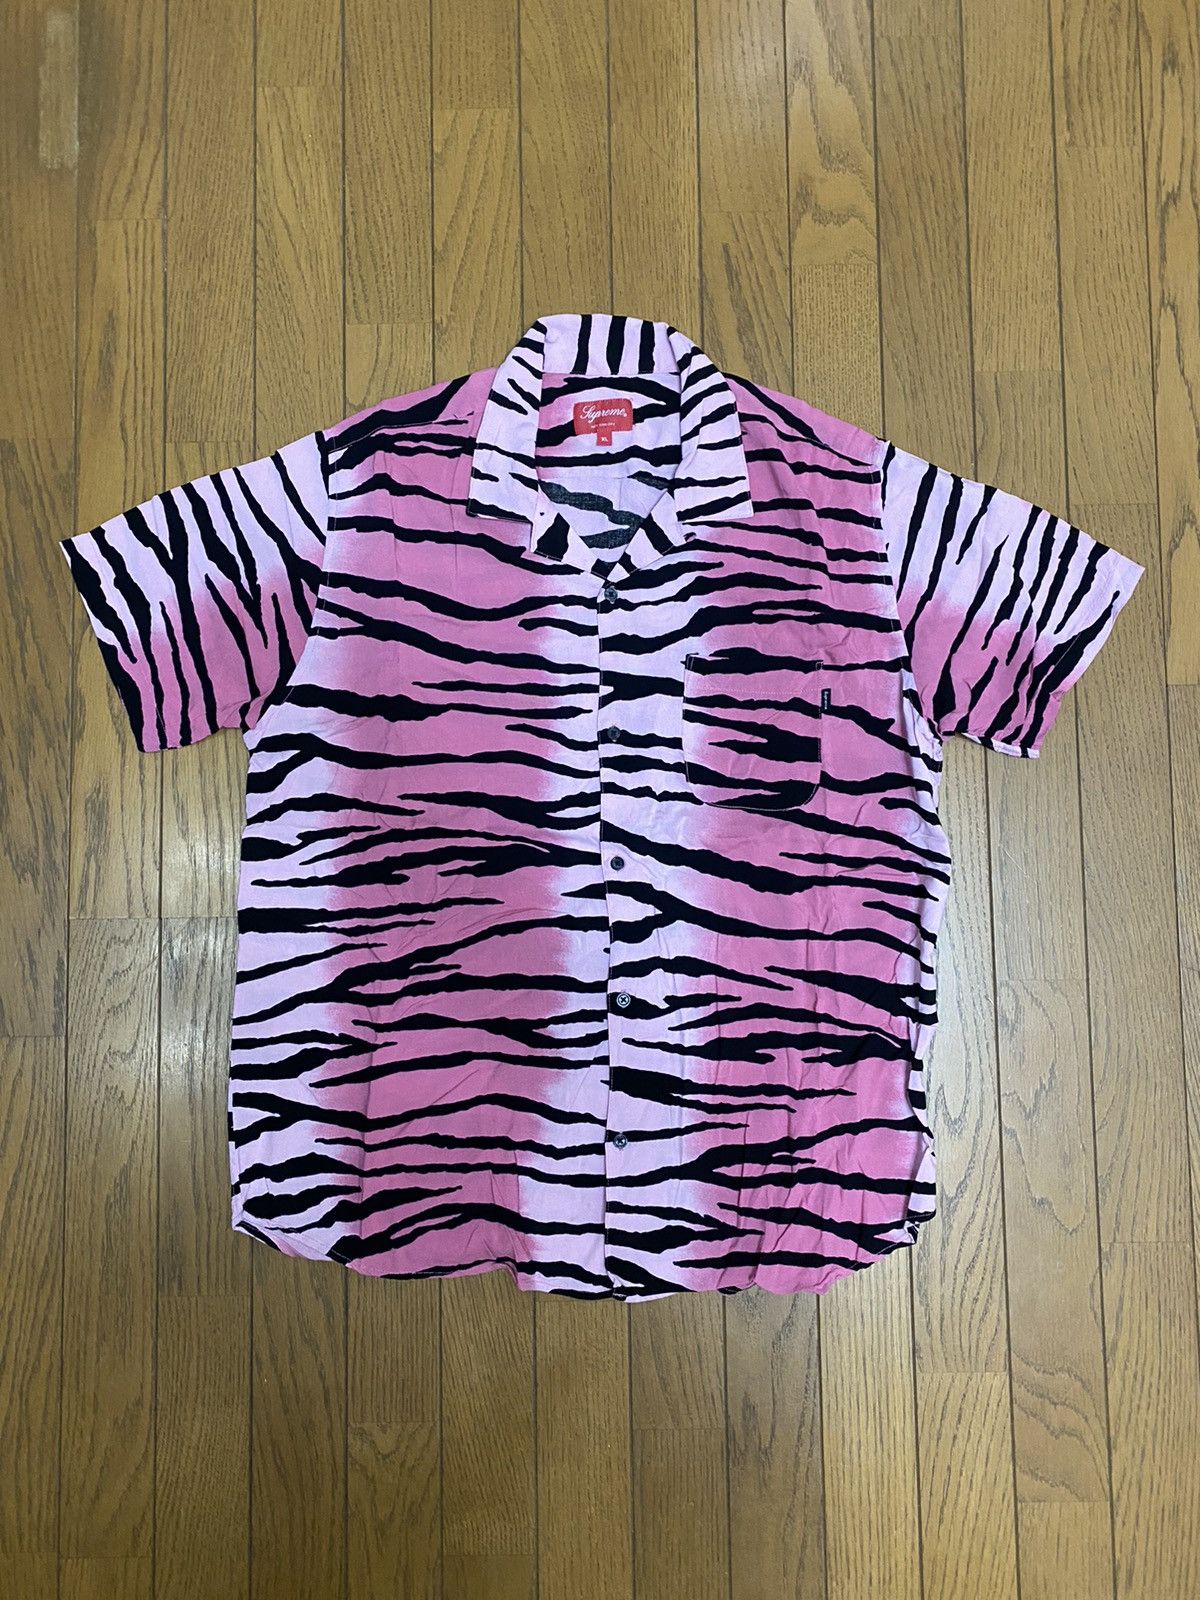 Supreme Supreme Tiger Stripe Rayon Shirt | Grailed